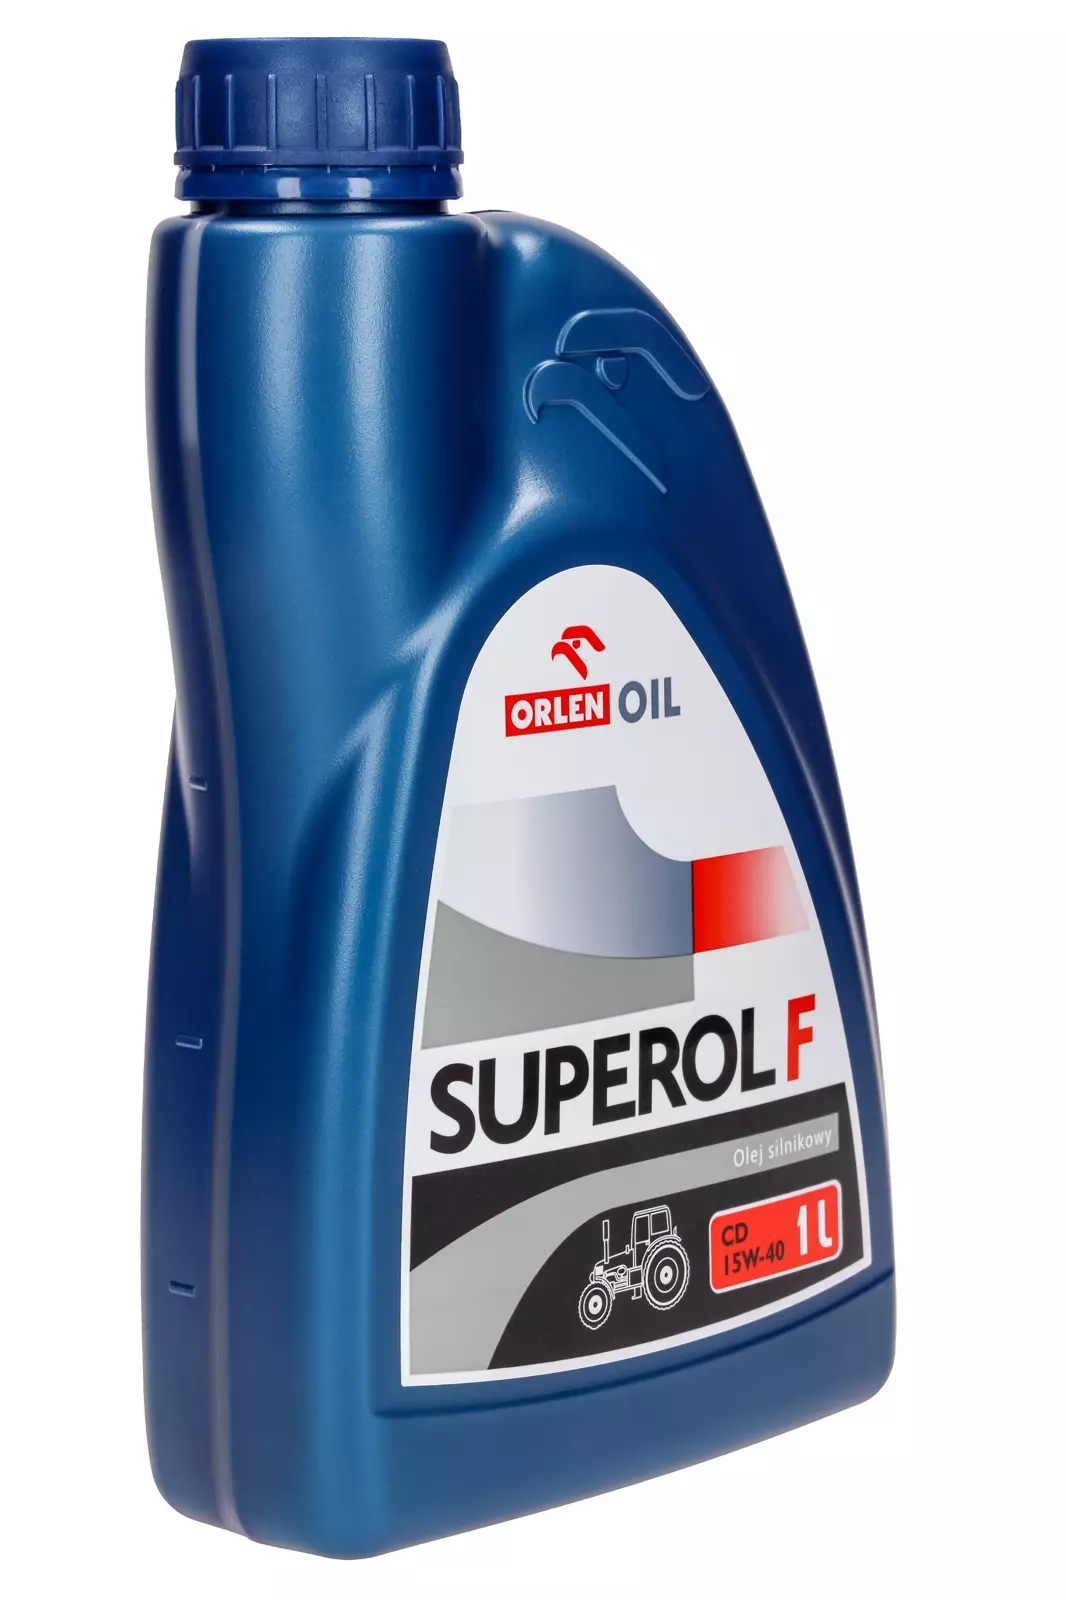 Моторное масло Orlen Superol F CD 15W-40 1л.